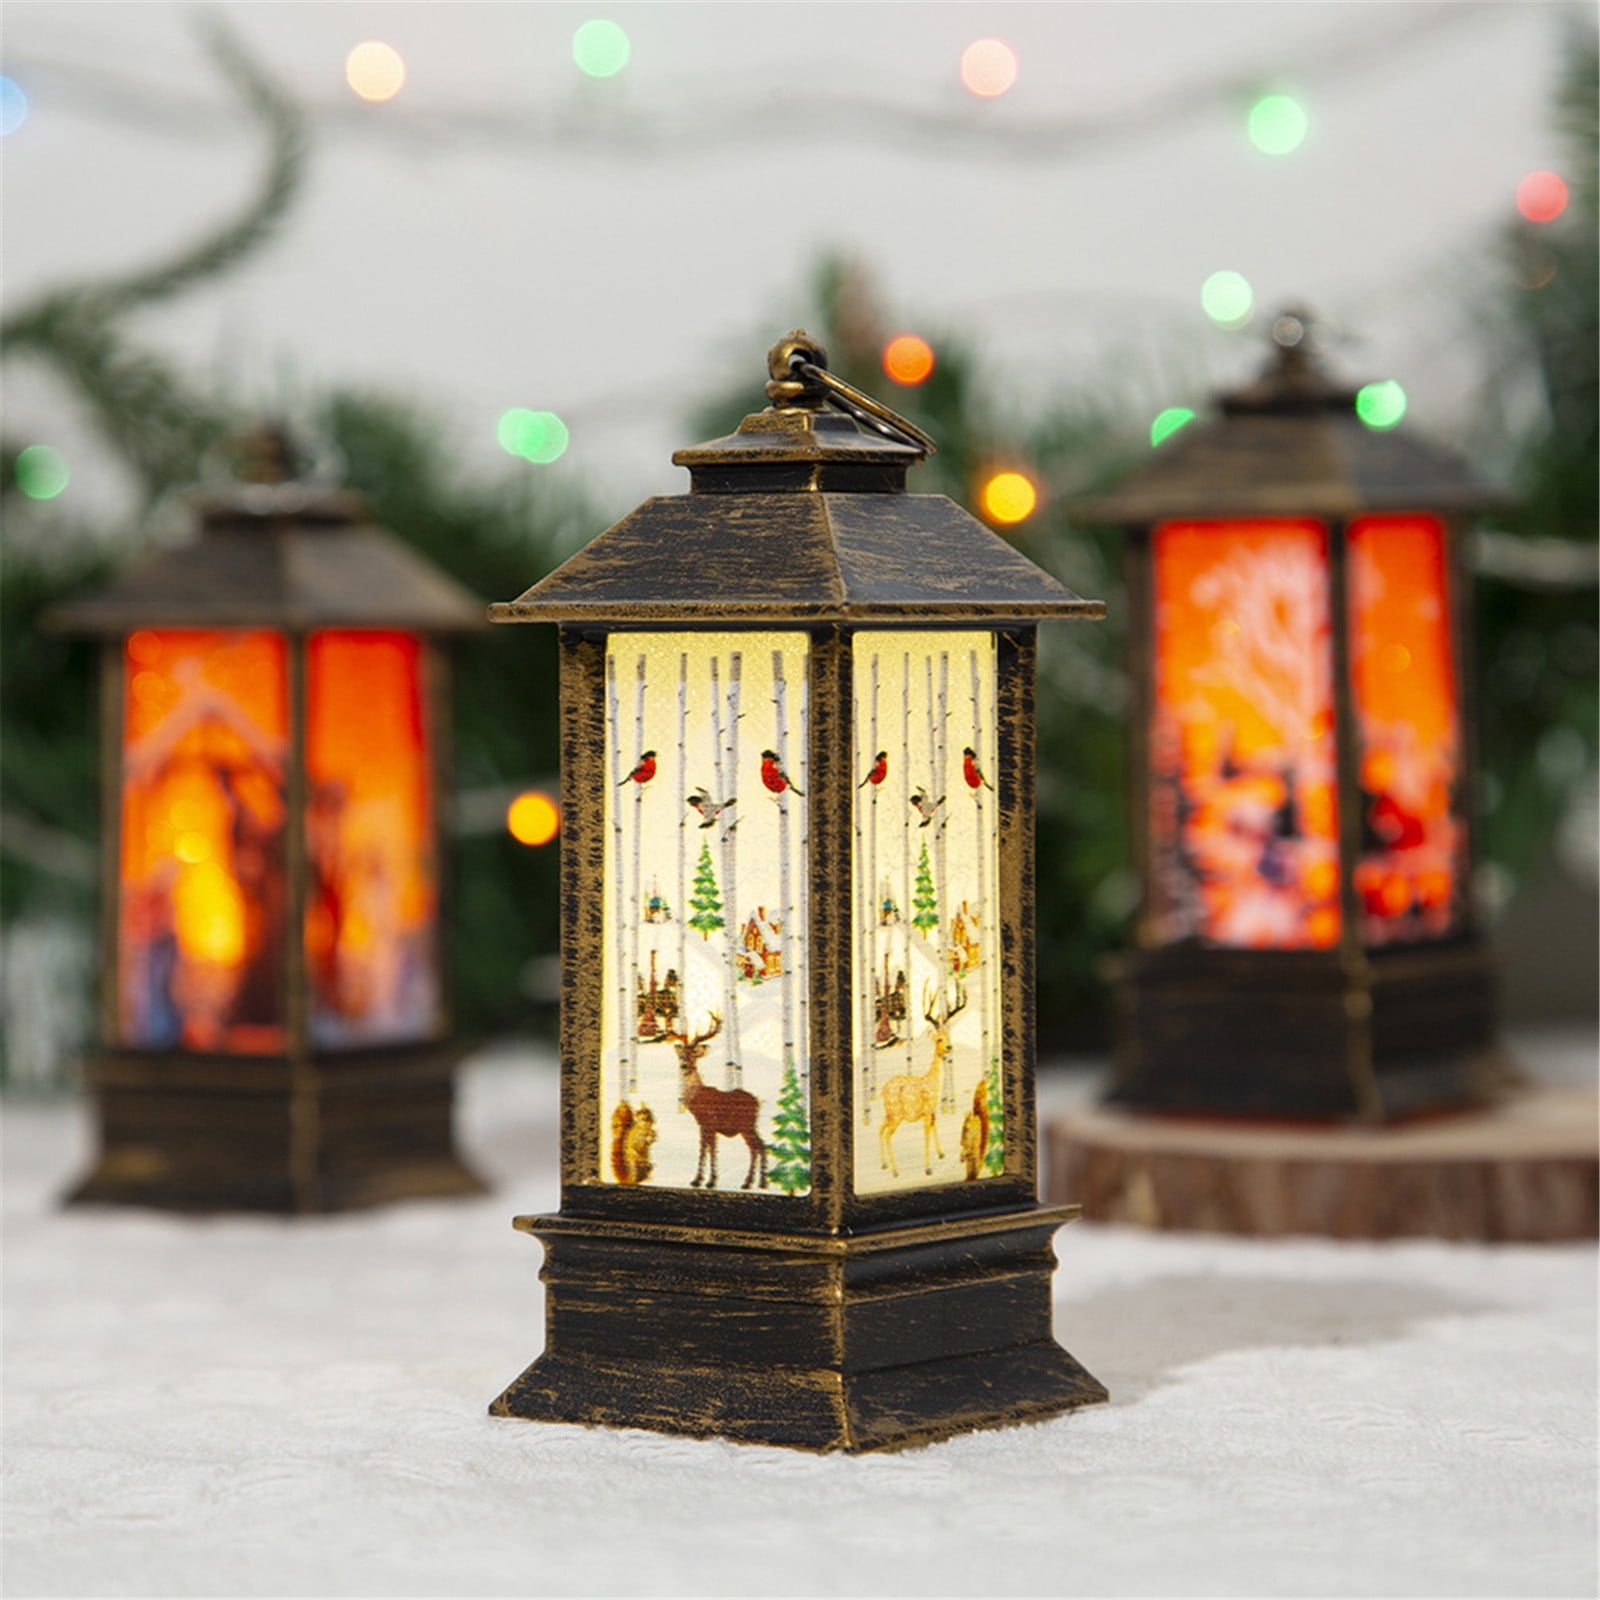 Xmmswdla Mini Star Lantern with Flickering LED, Battery Included,Decorative Hanging Lantern,Christmas Decorative Lantern,Indoor Candle Lantern,Battery